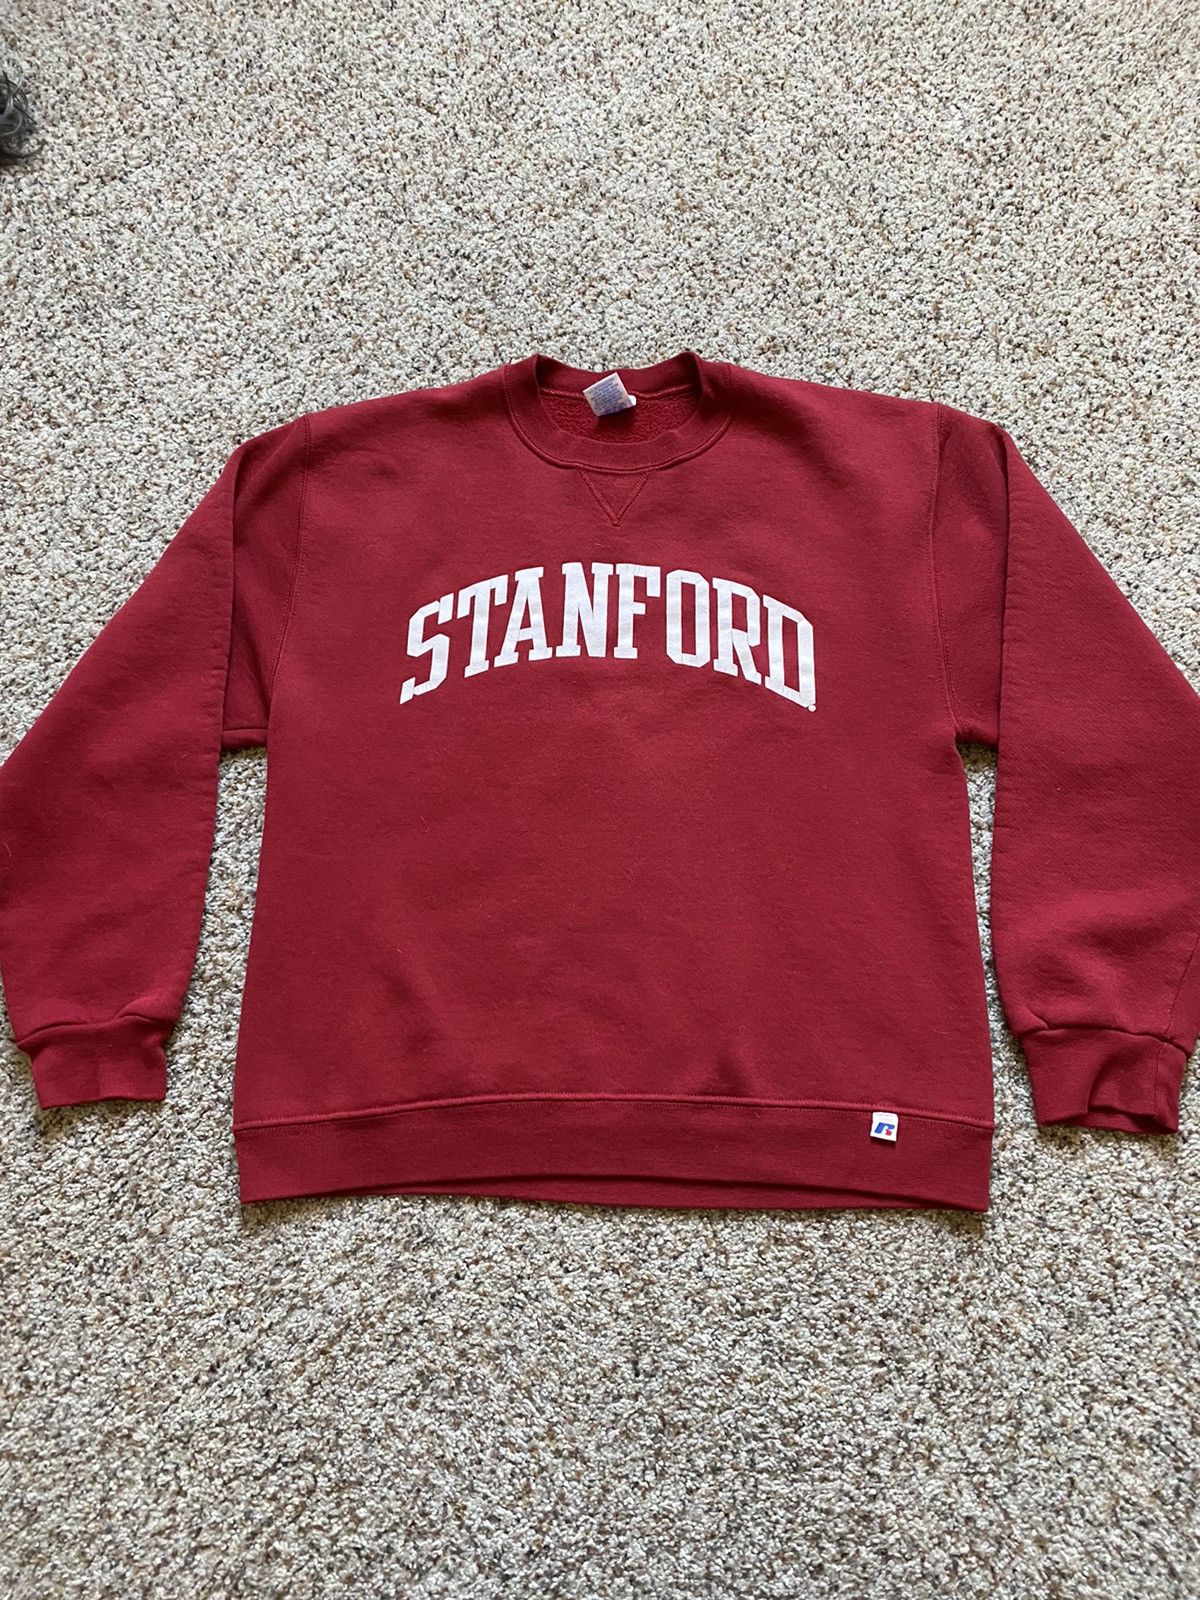 Vintage Stanford Crewneck | Grailed